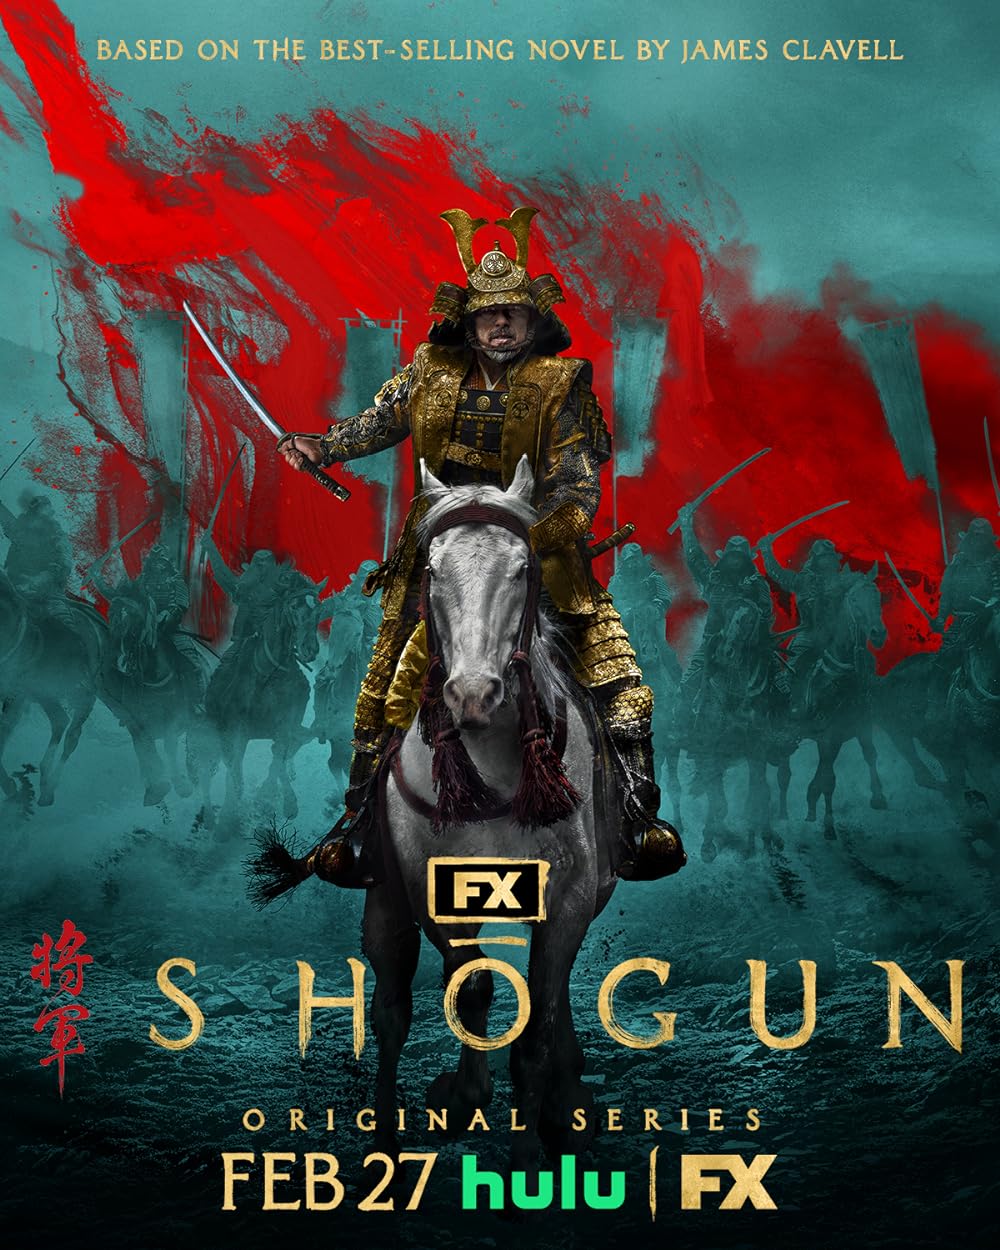 Shogun "Shōgun" ou Xógun, uma nova série de estrátegias de poder